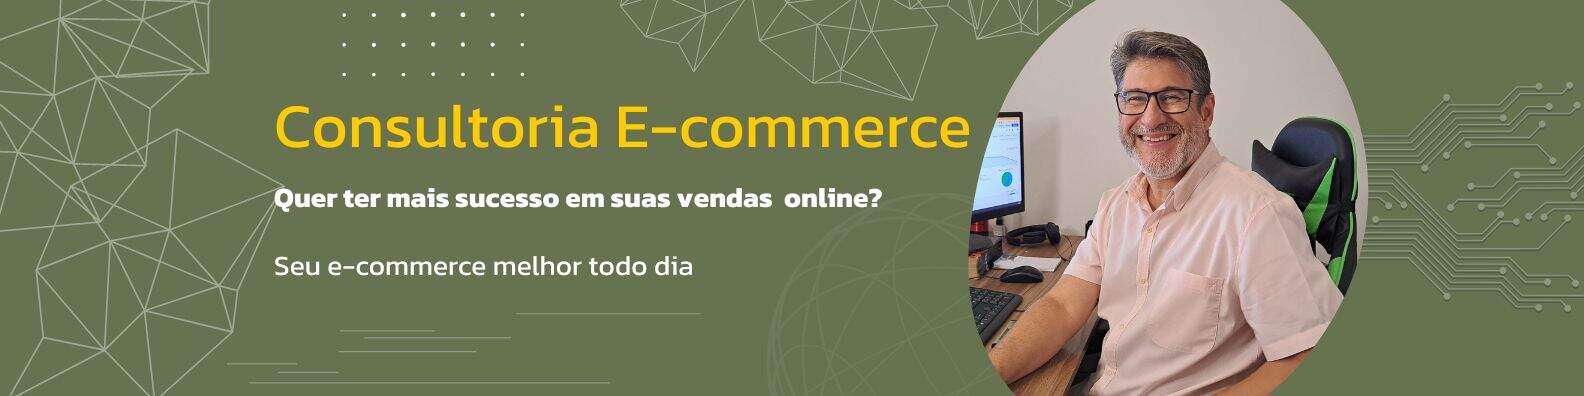 consultoria e-commerce em bh| Paulo Canarim